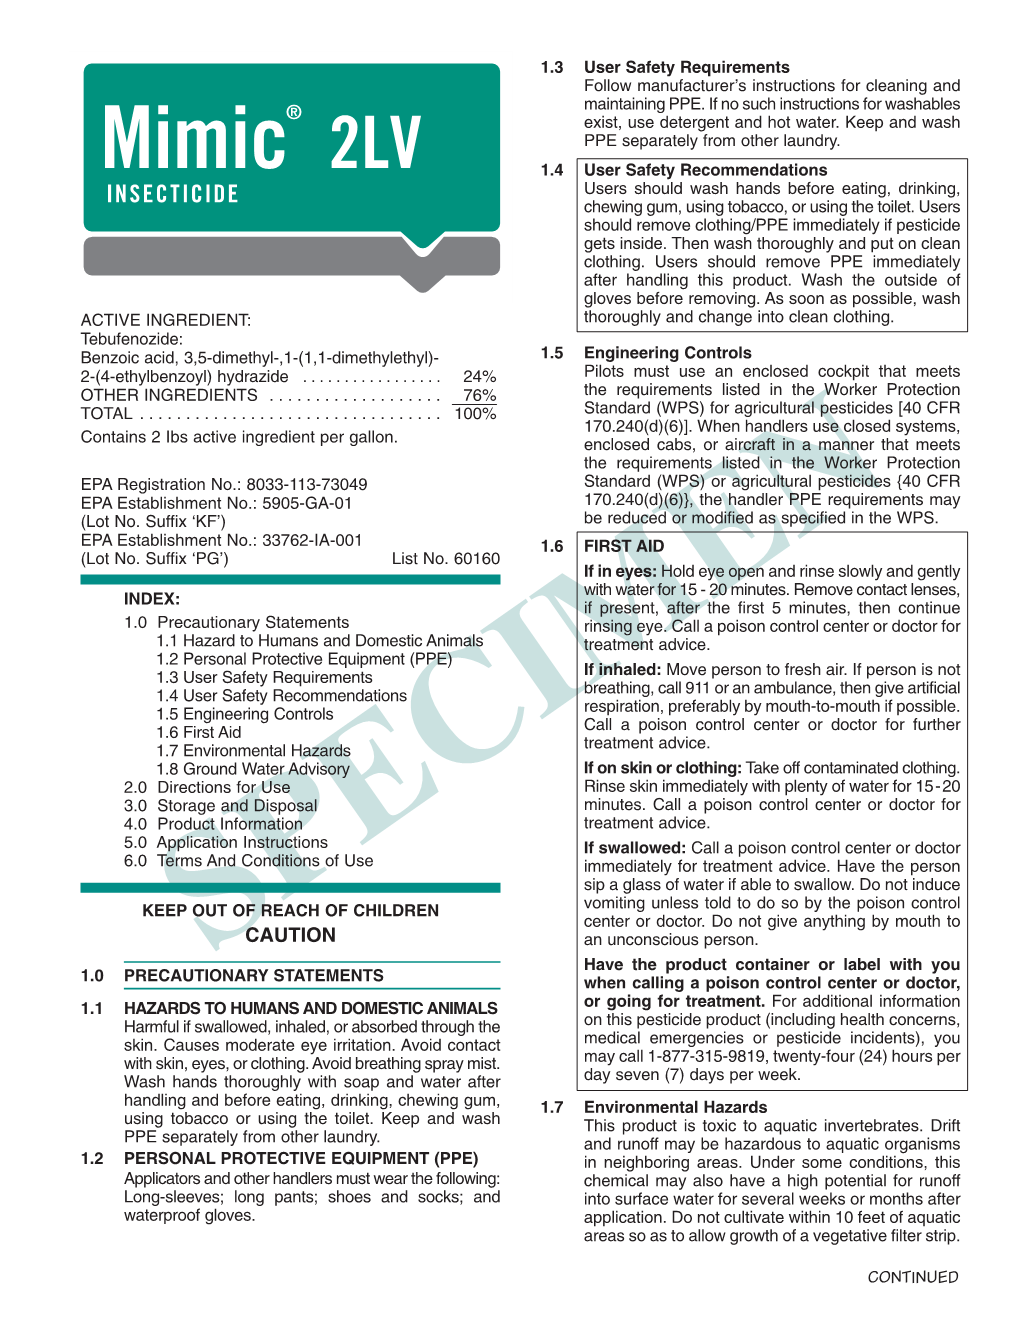 Mimic 2LV Label